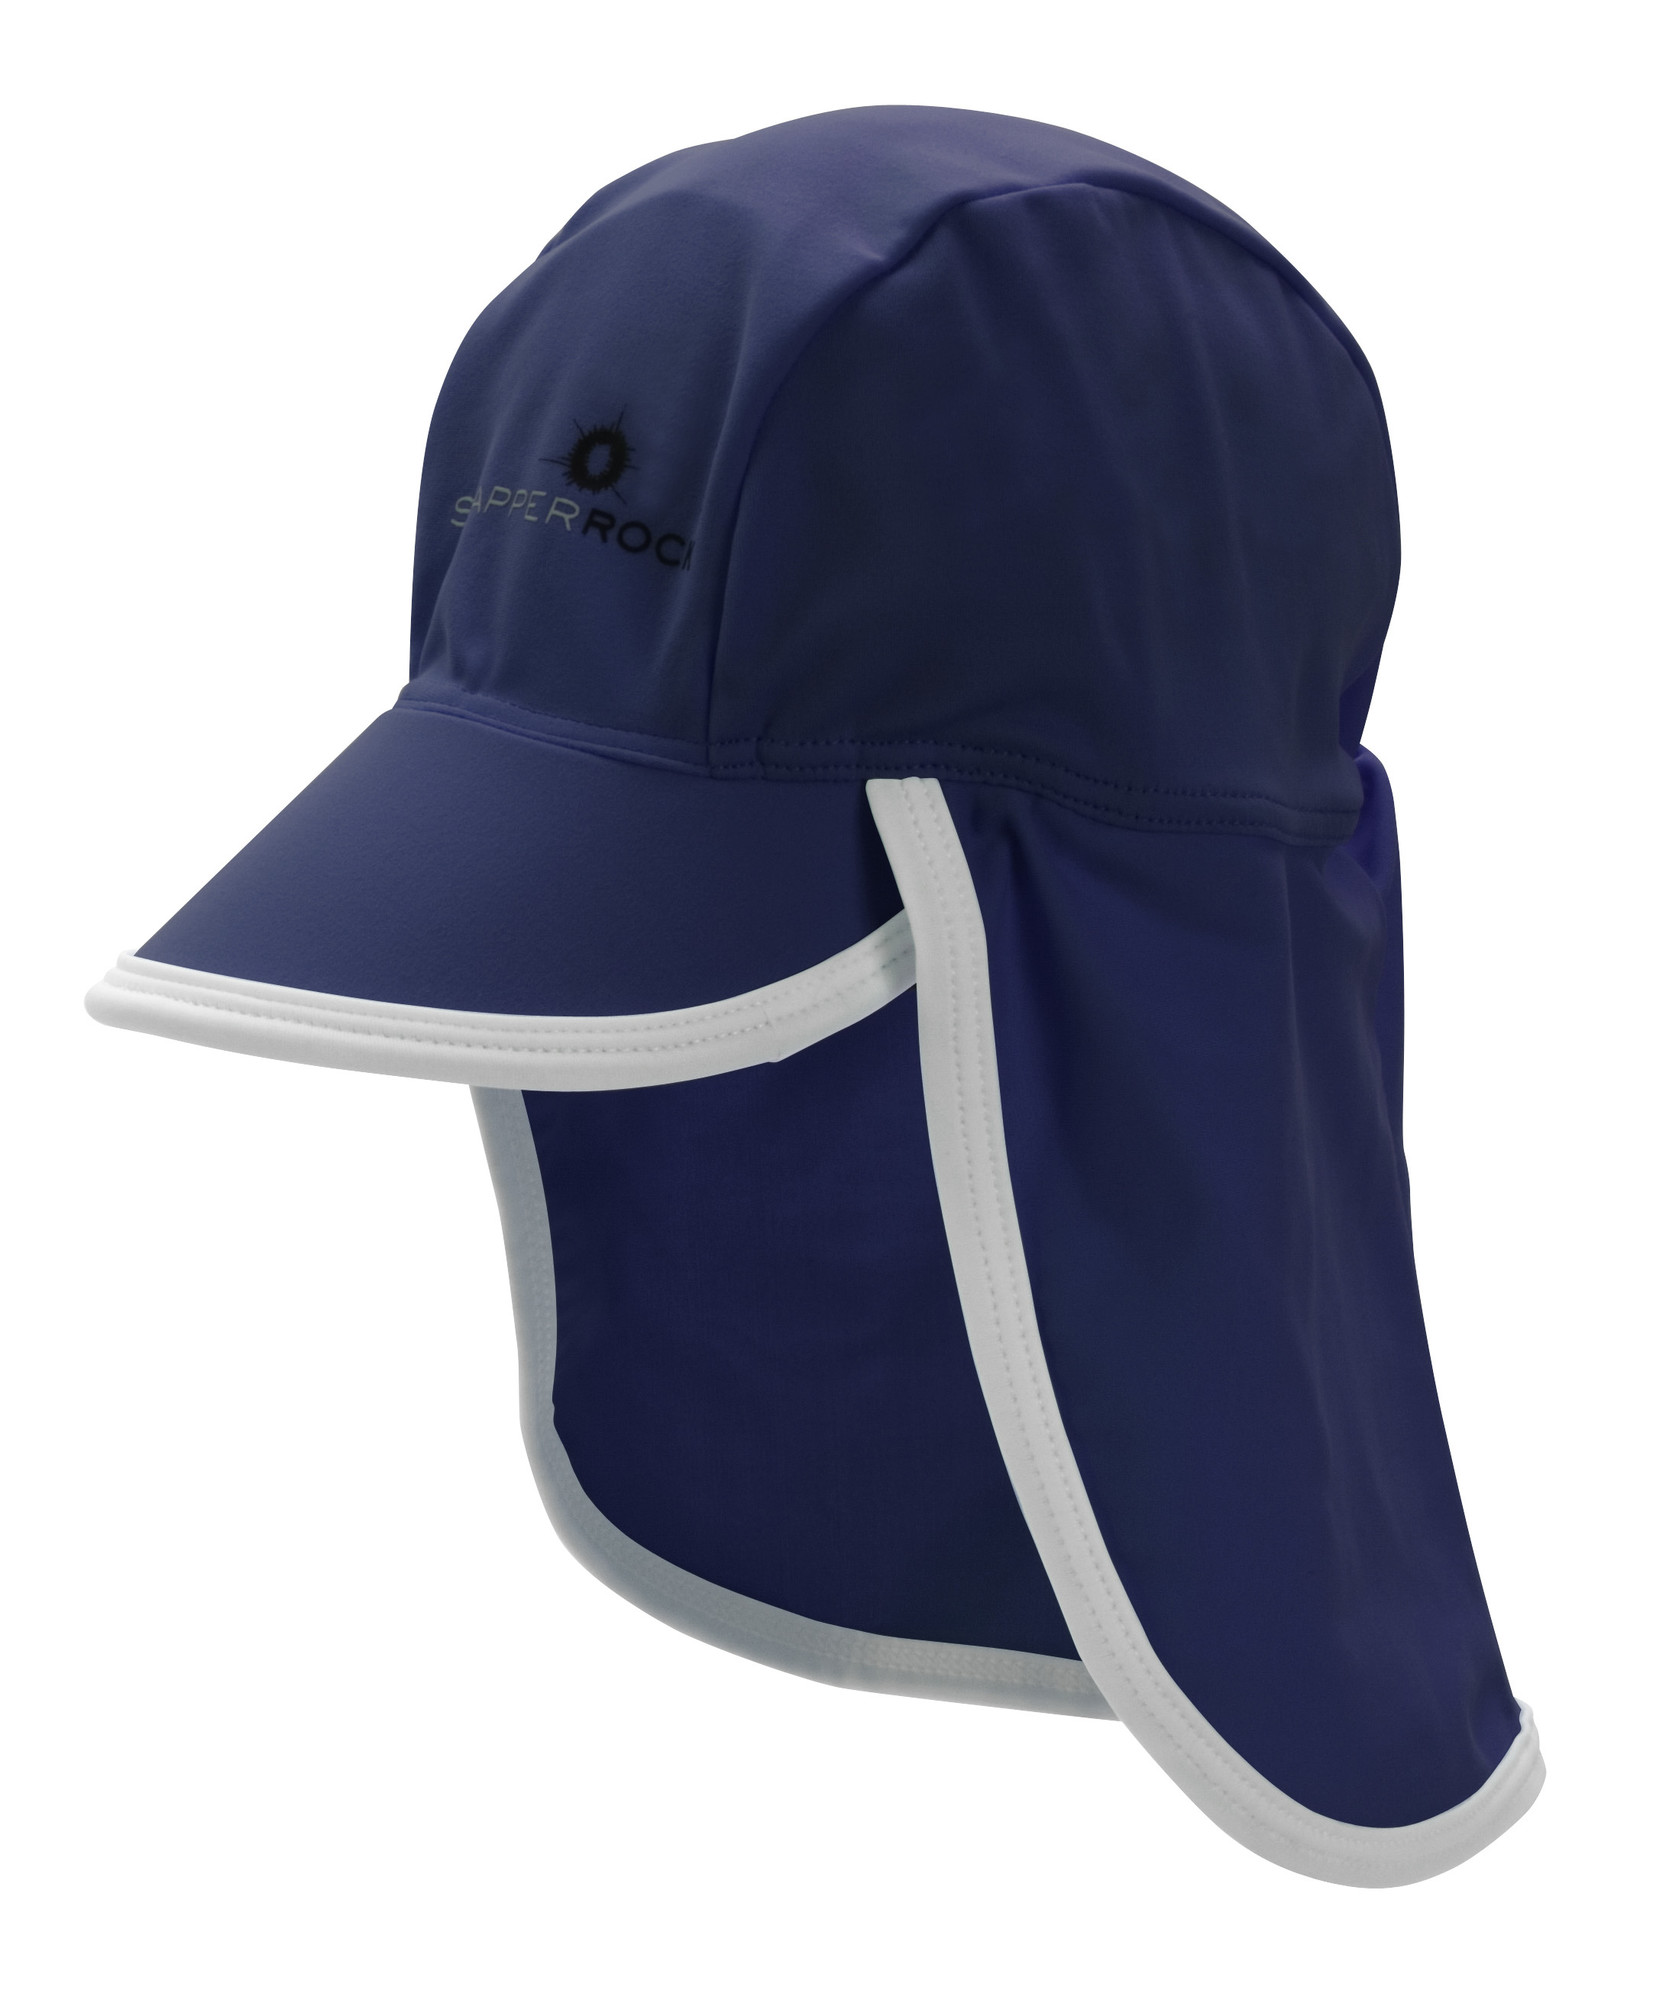 SnapperRock UV Baby Flap Hat- Navy